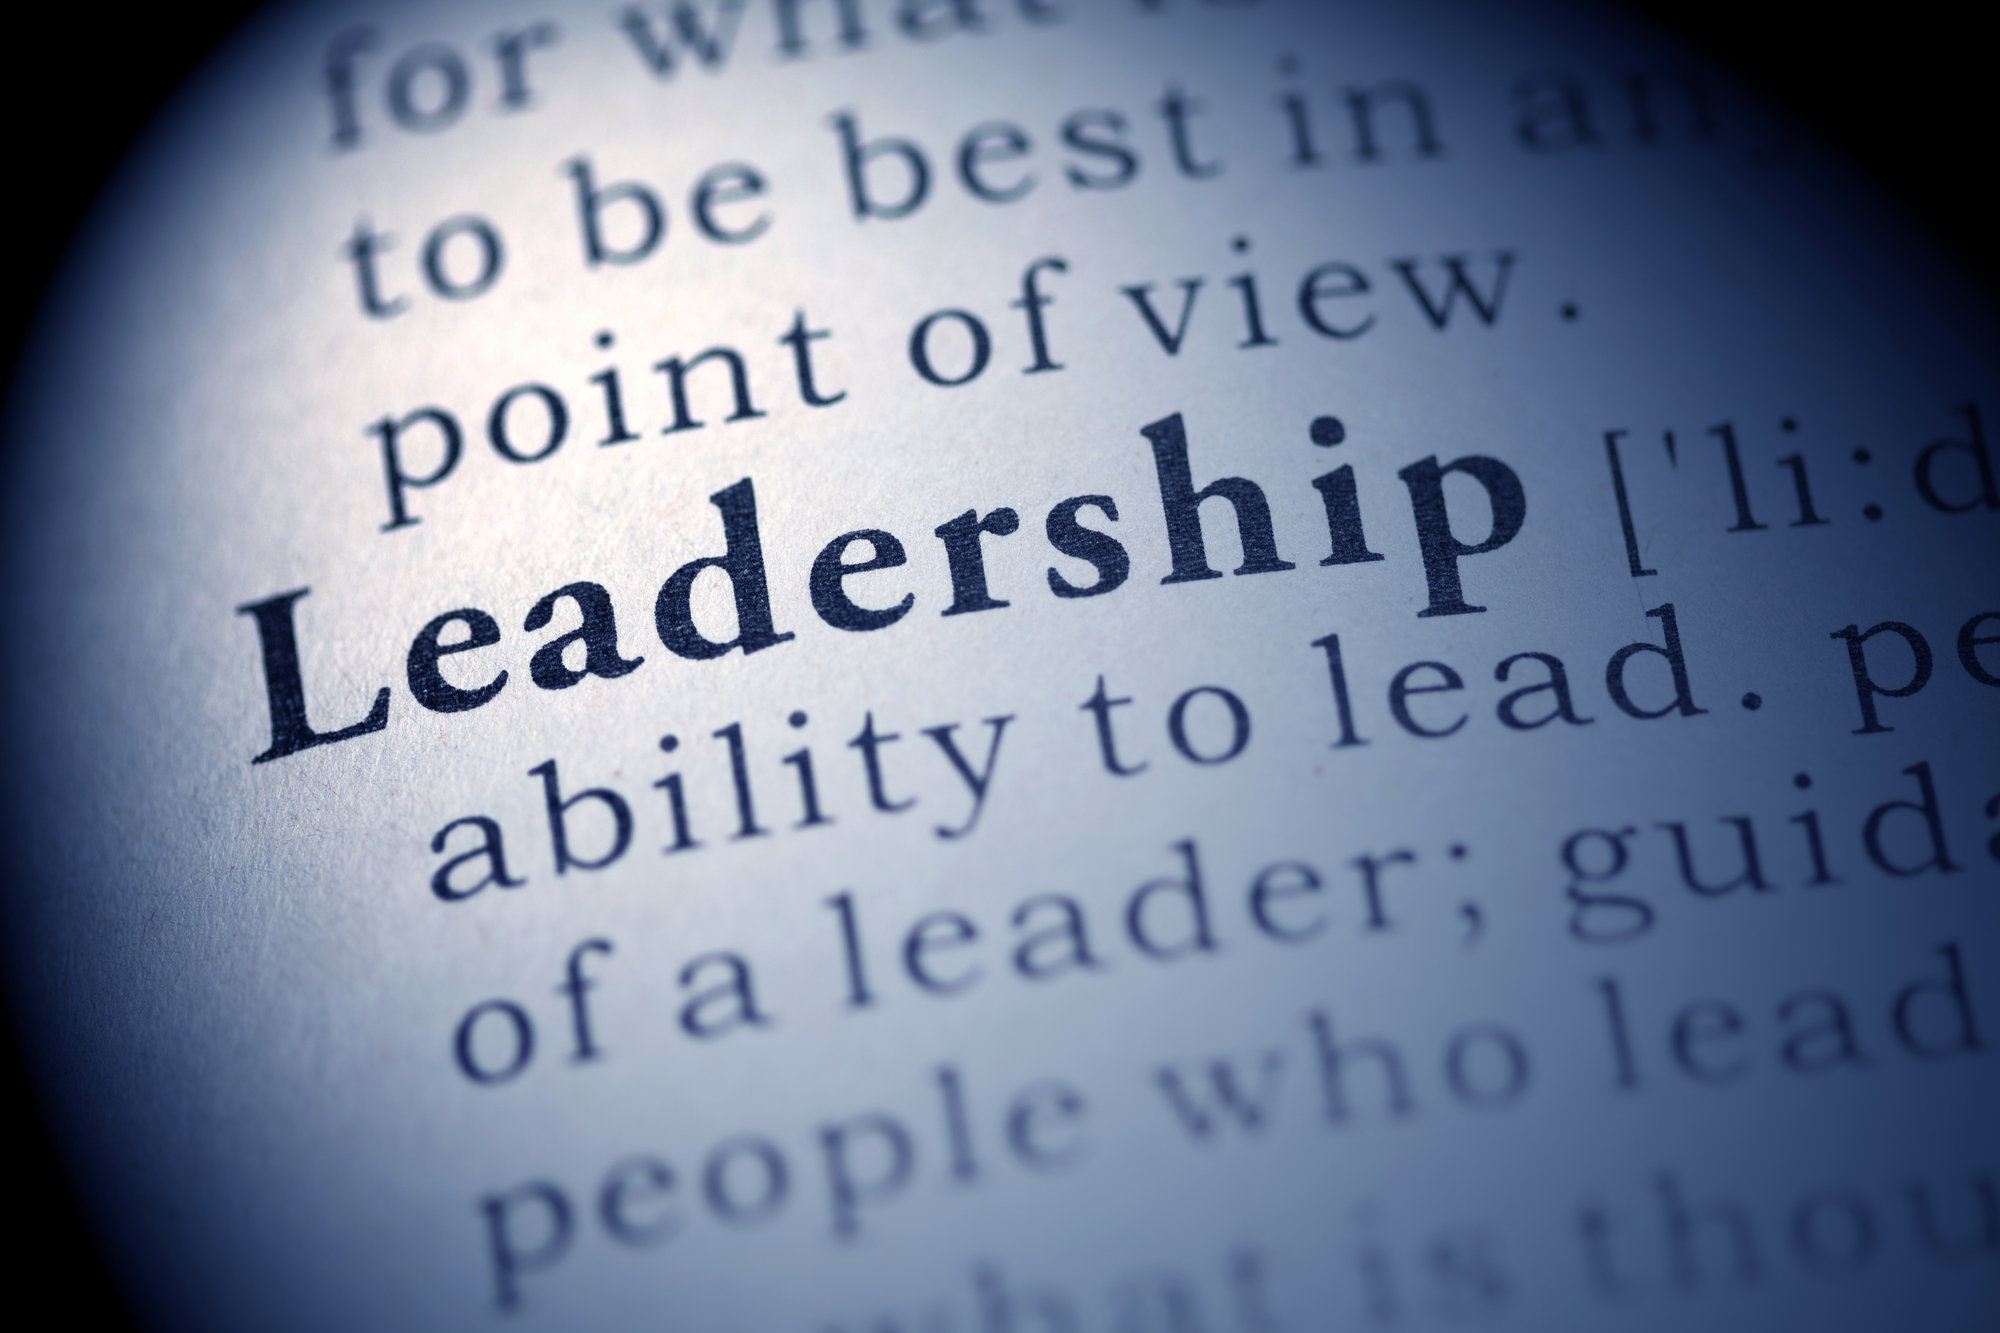 Leadership roles